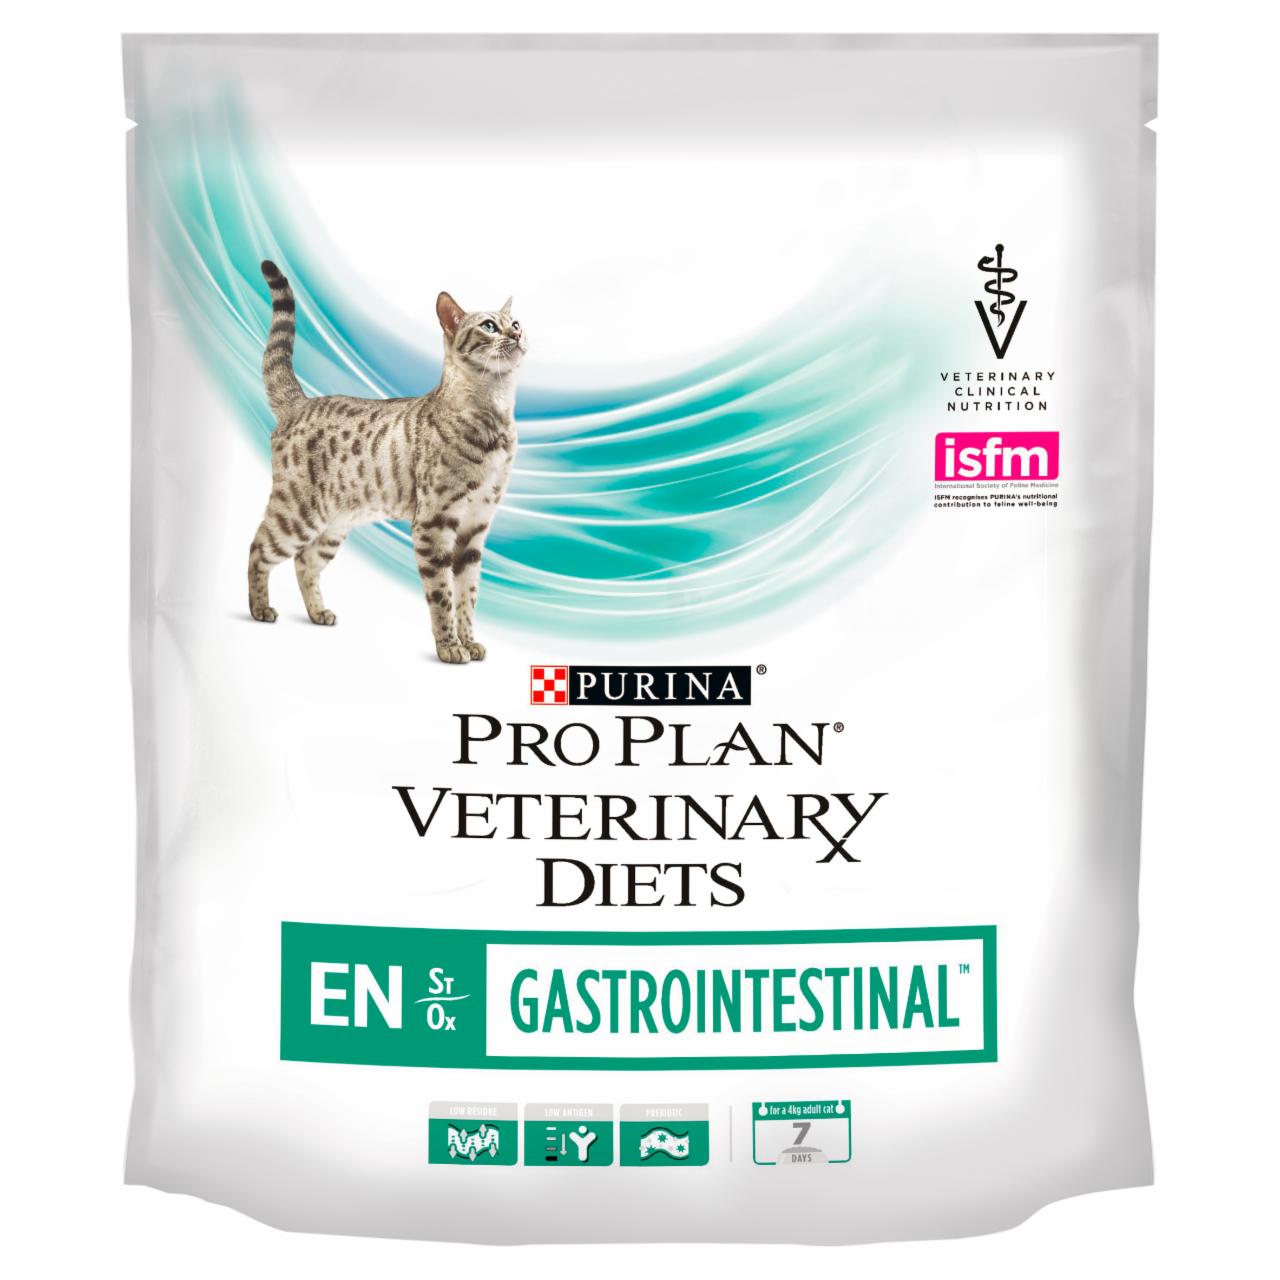 Zdjęcia - PRO PLAN Veterinary Diets EN St/Ox Gastrointestinal Karma dla kotów 400 g